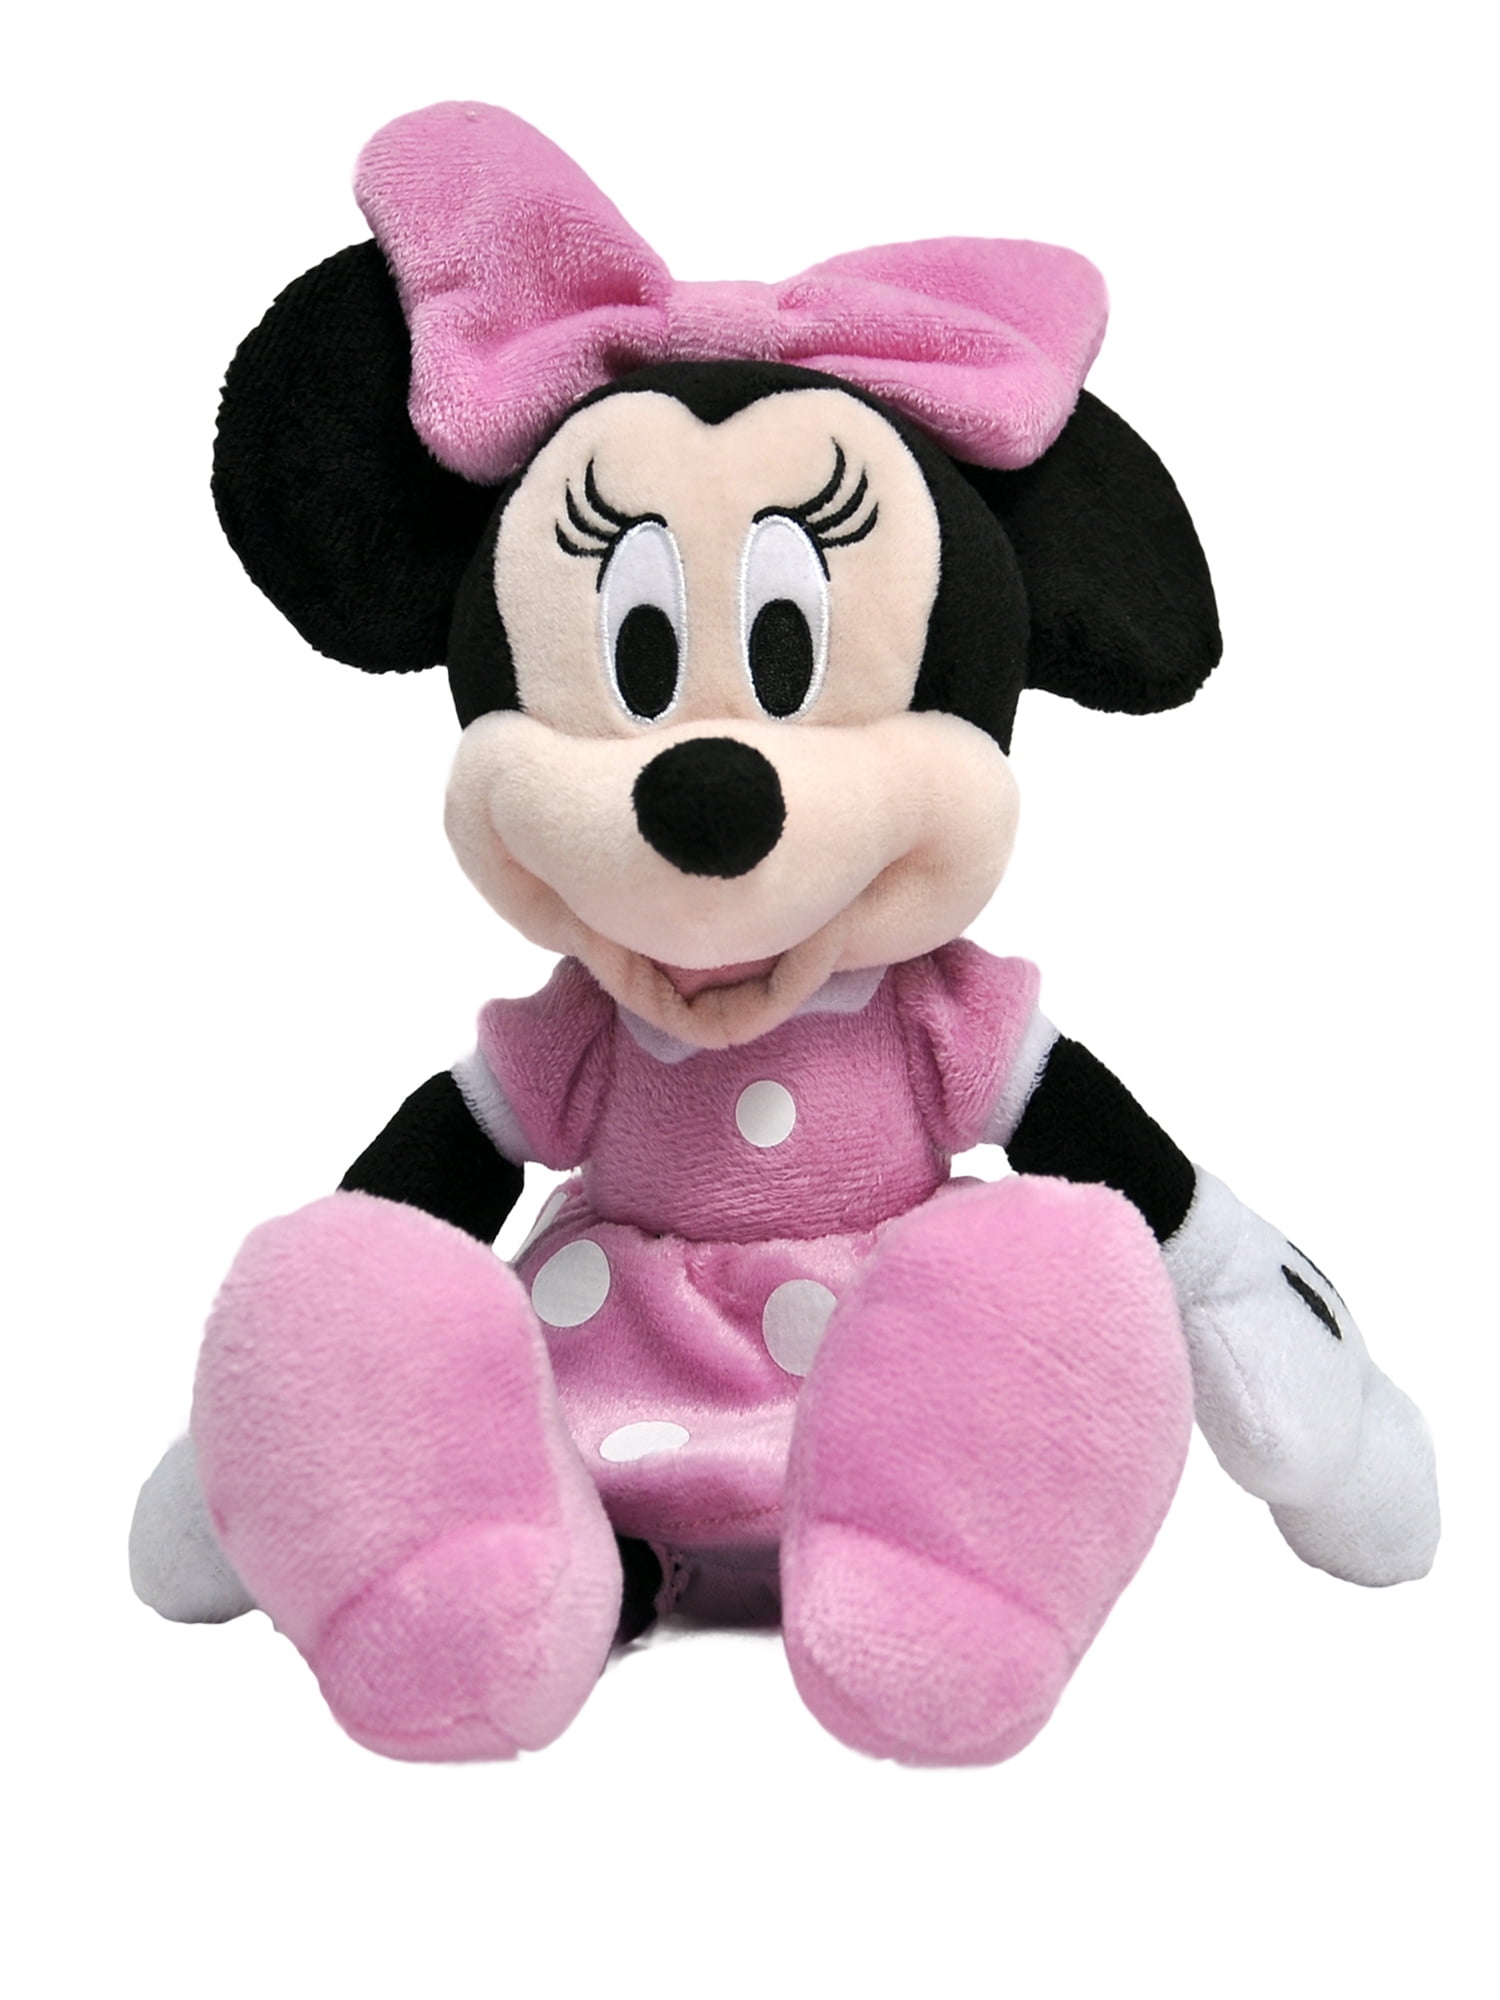 Kids Preferred Disney Musical Mini 7" inches Plush Cud Set Mickey/Minnie/Pooh 